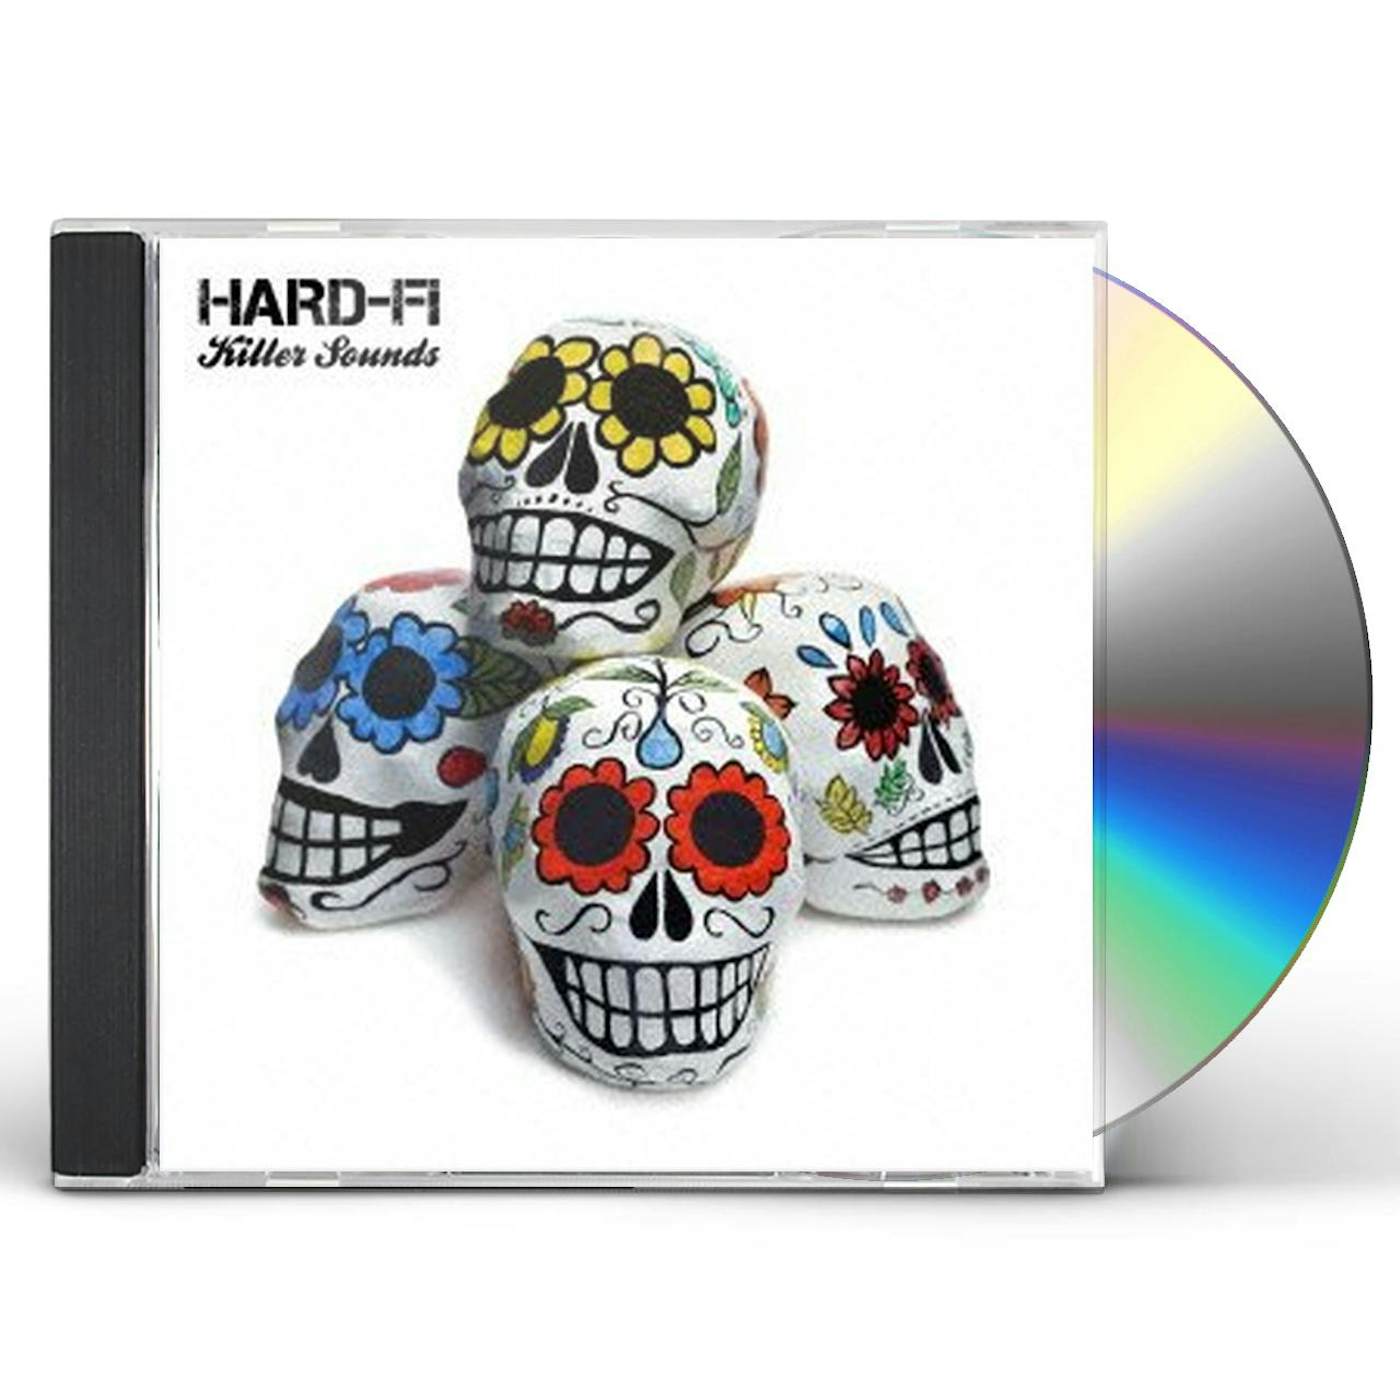 Hard-FI KILLER SOUNDS CD